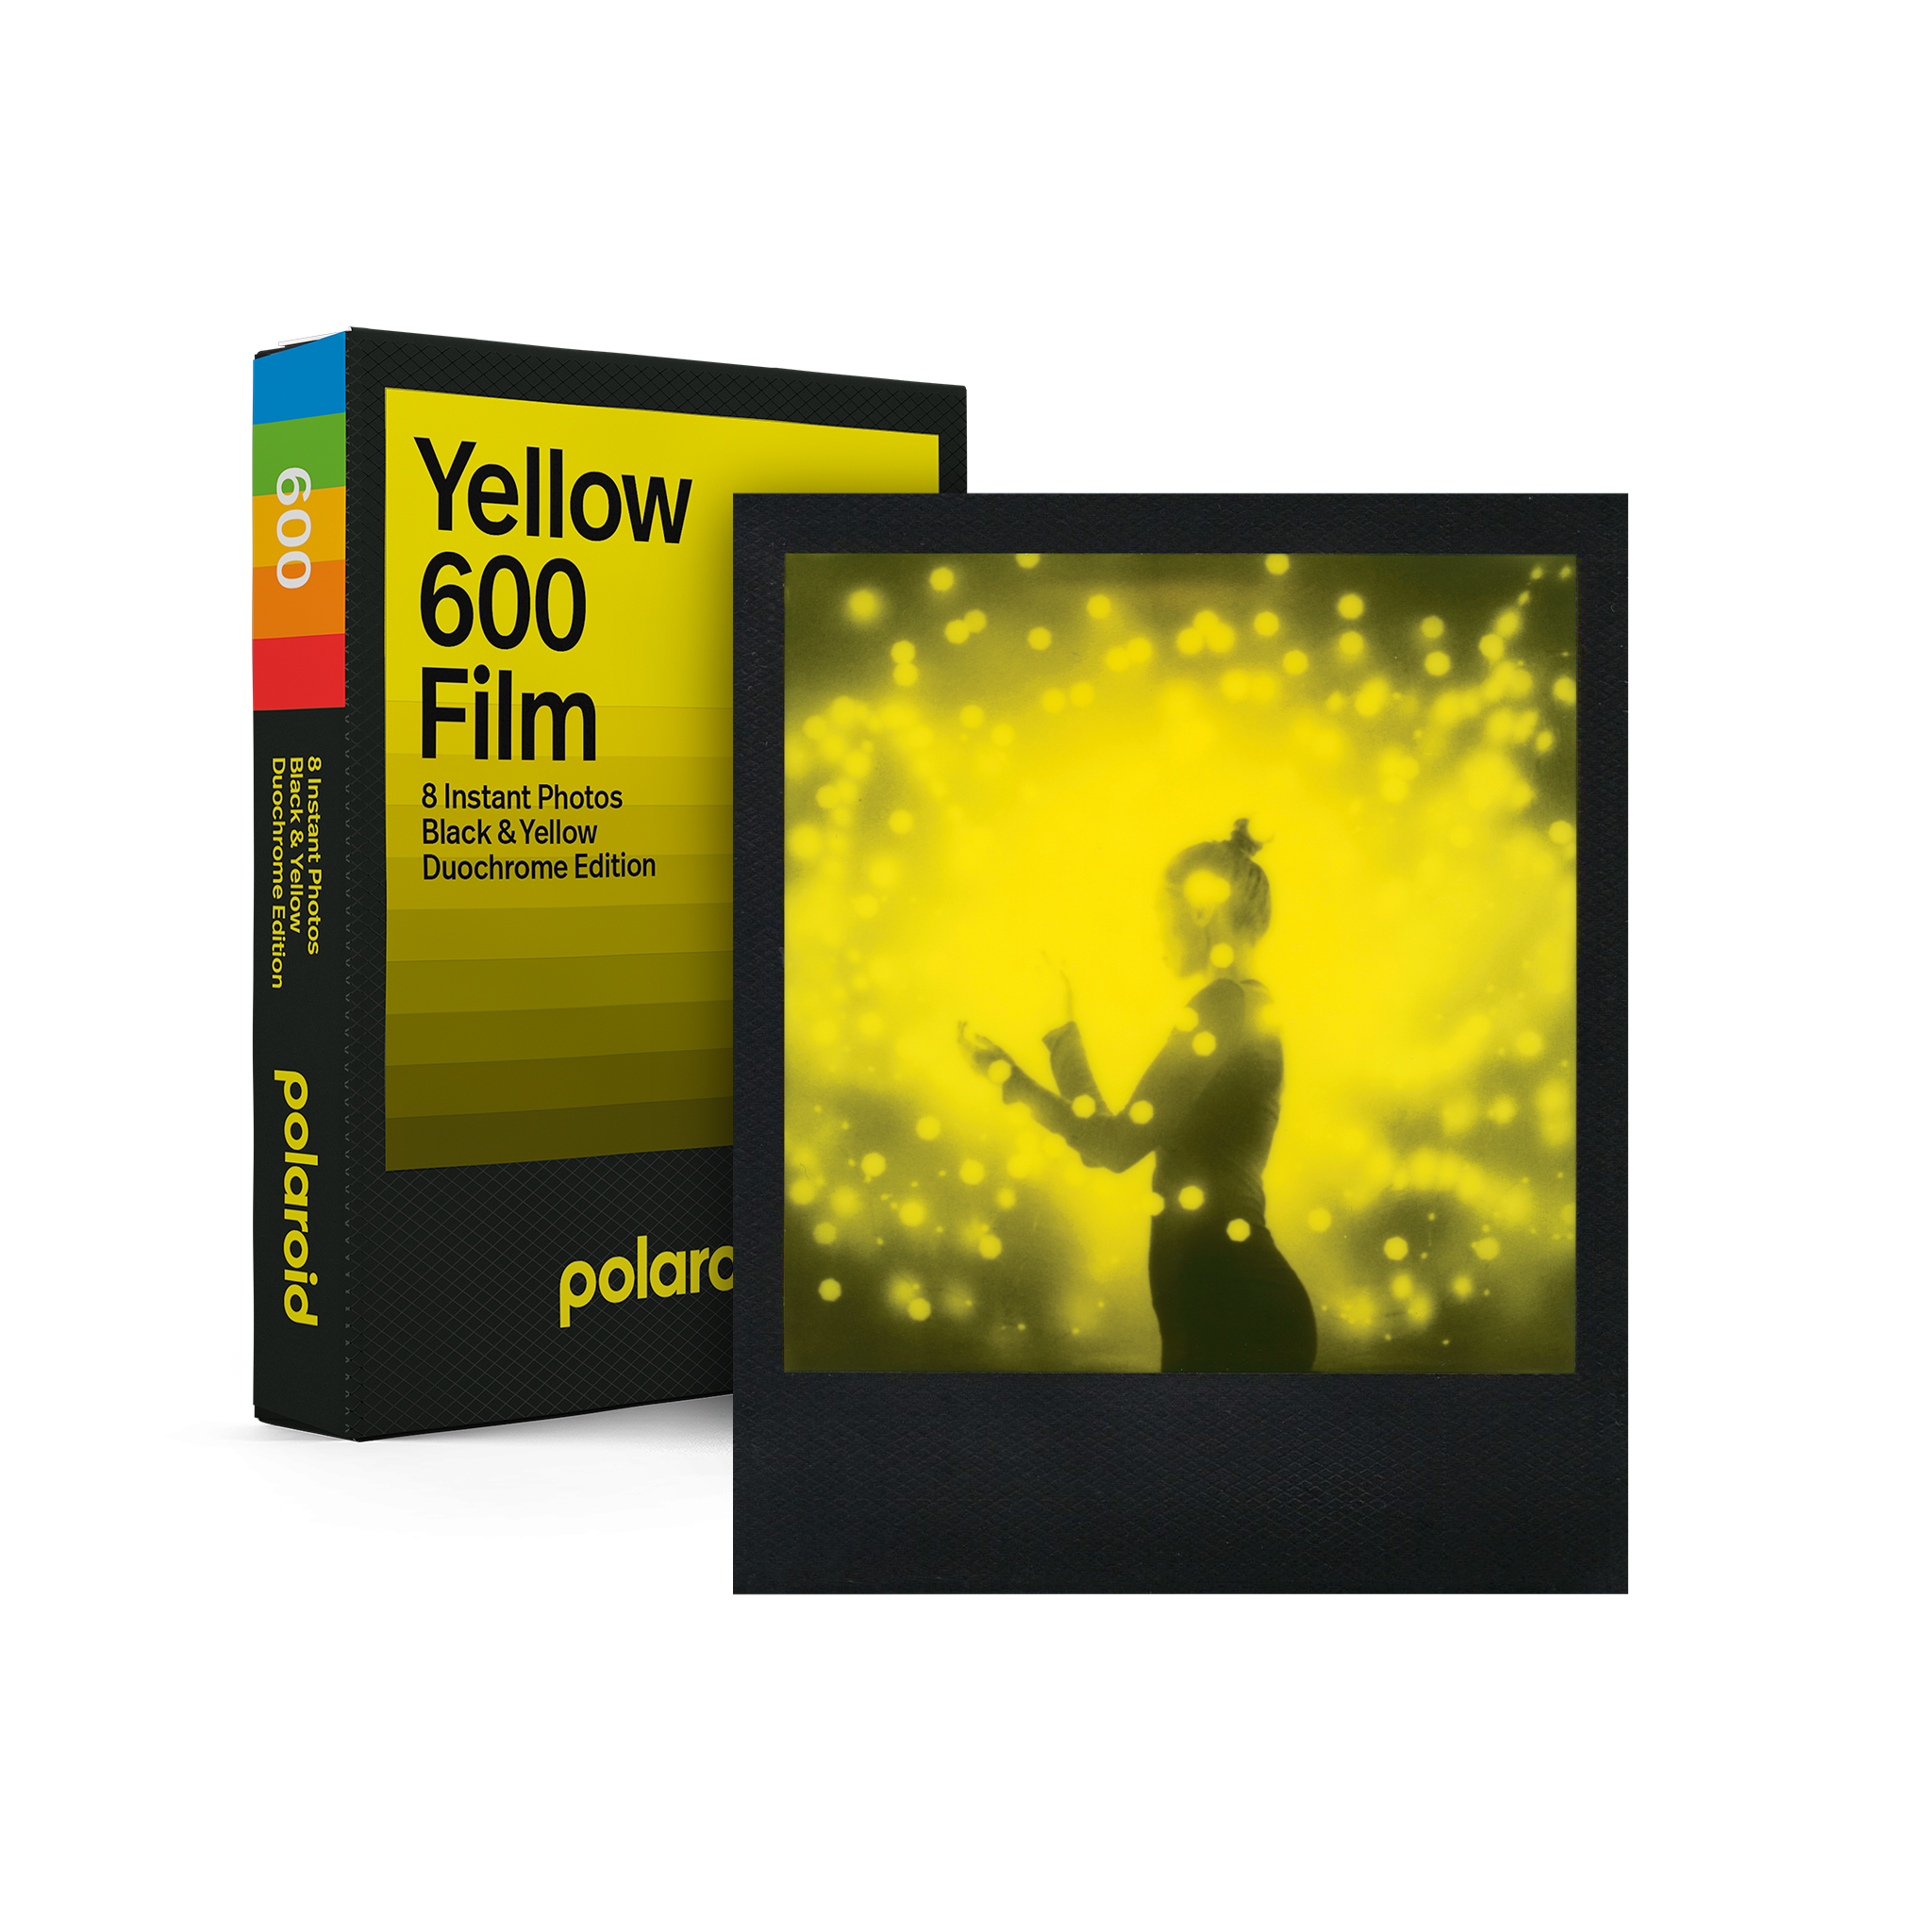 Polaroid 600 Color Instant Film - Round Frame Edition